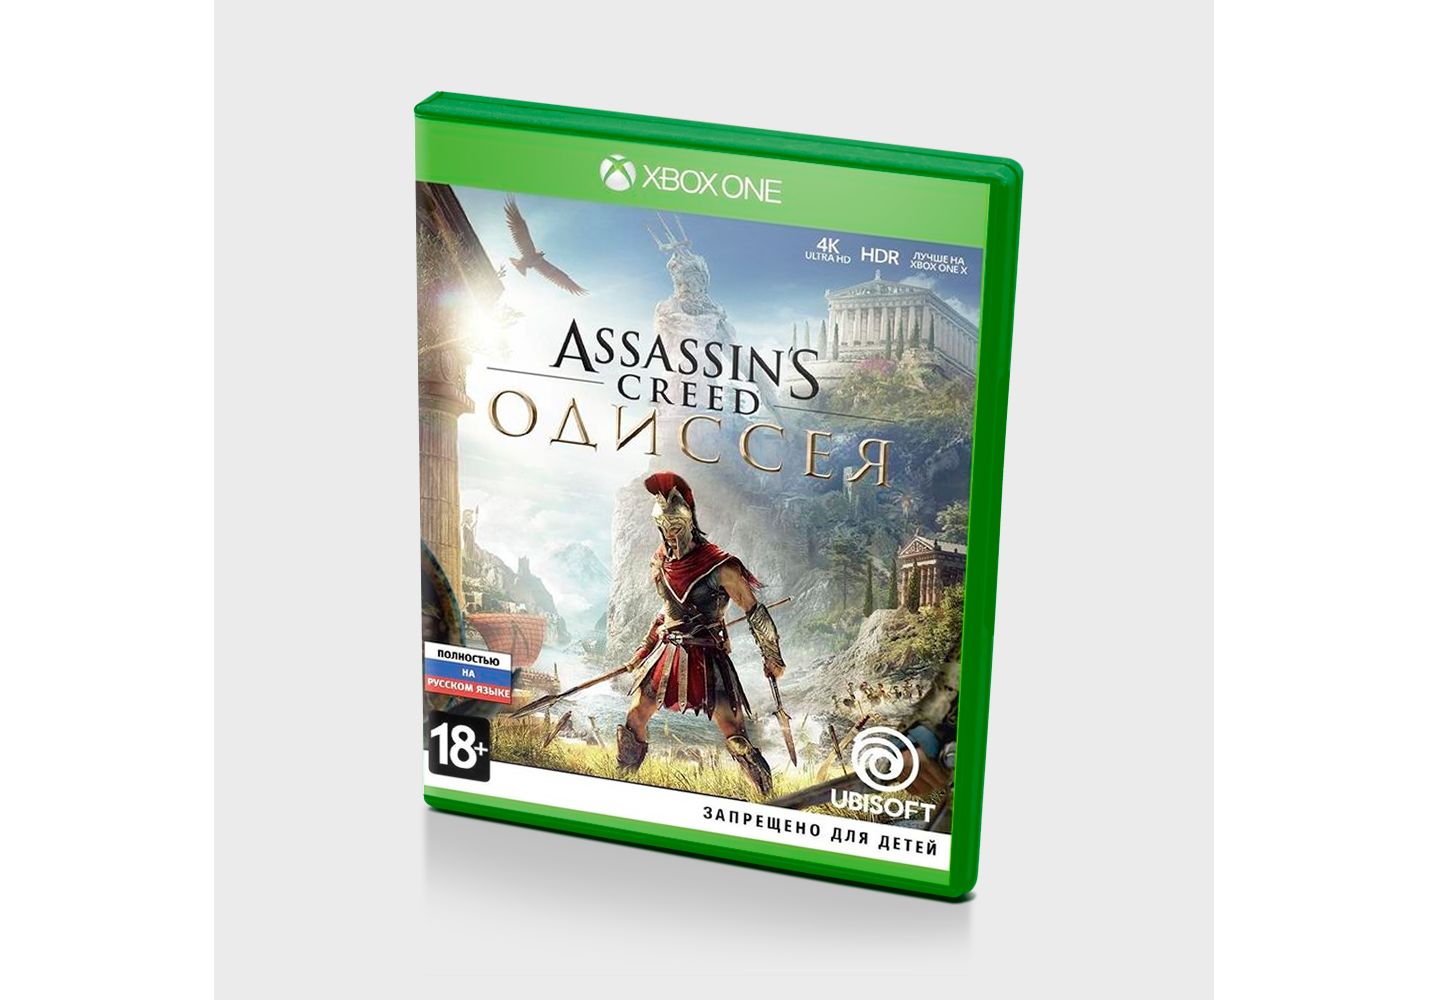 Игры на xbox one играть. Xbox one диск Assassins Creed. Assassins Creed Одиссея Xbox one диск. Диски для Xbox 360 ассасин. Assassin's Creed Xbox 360 диск.